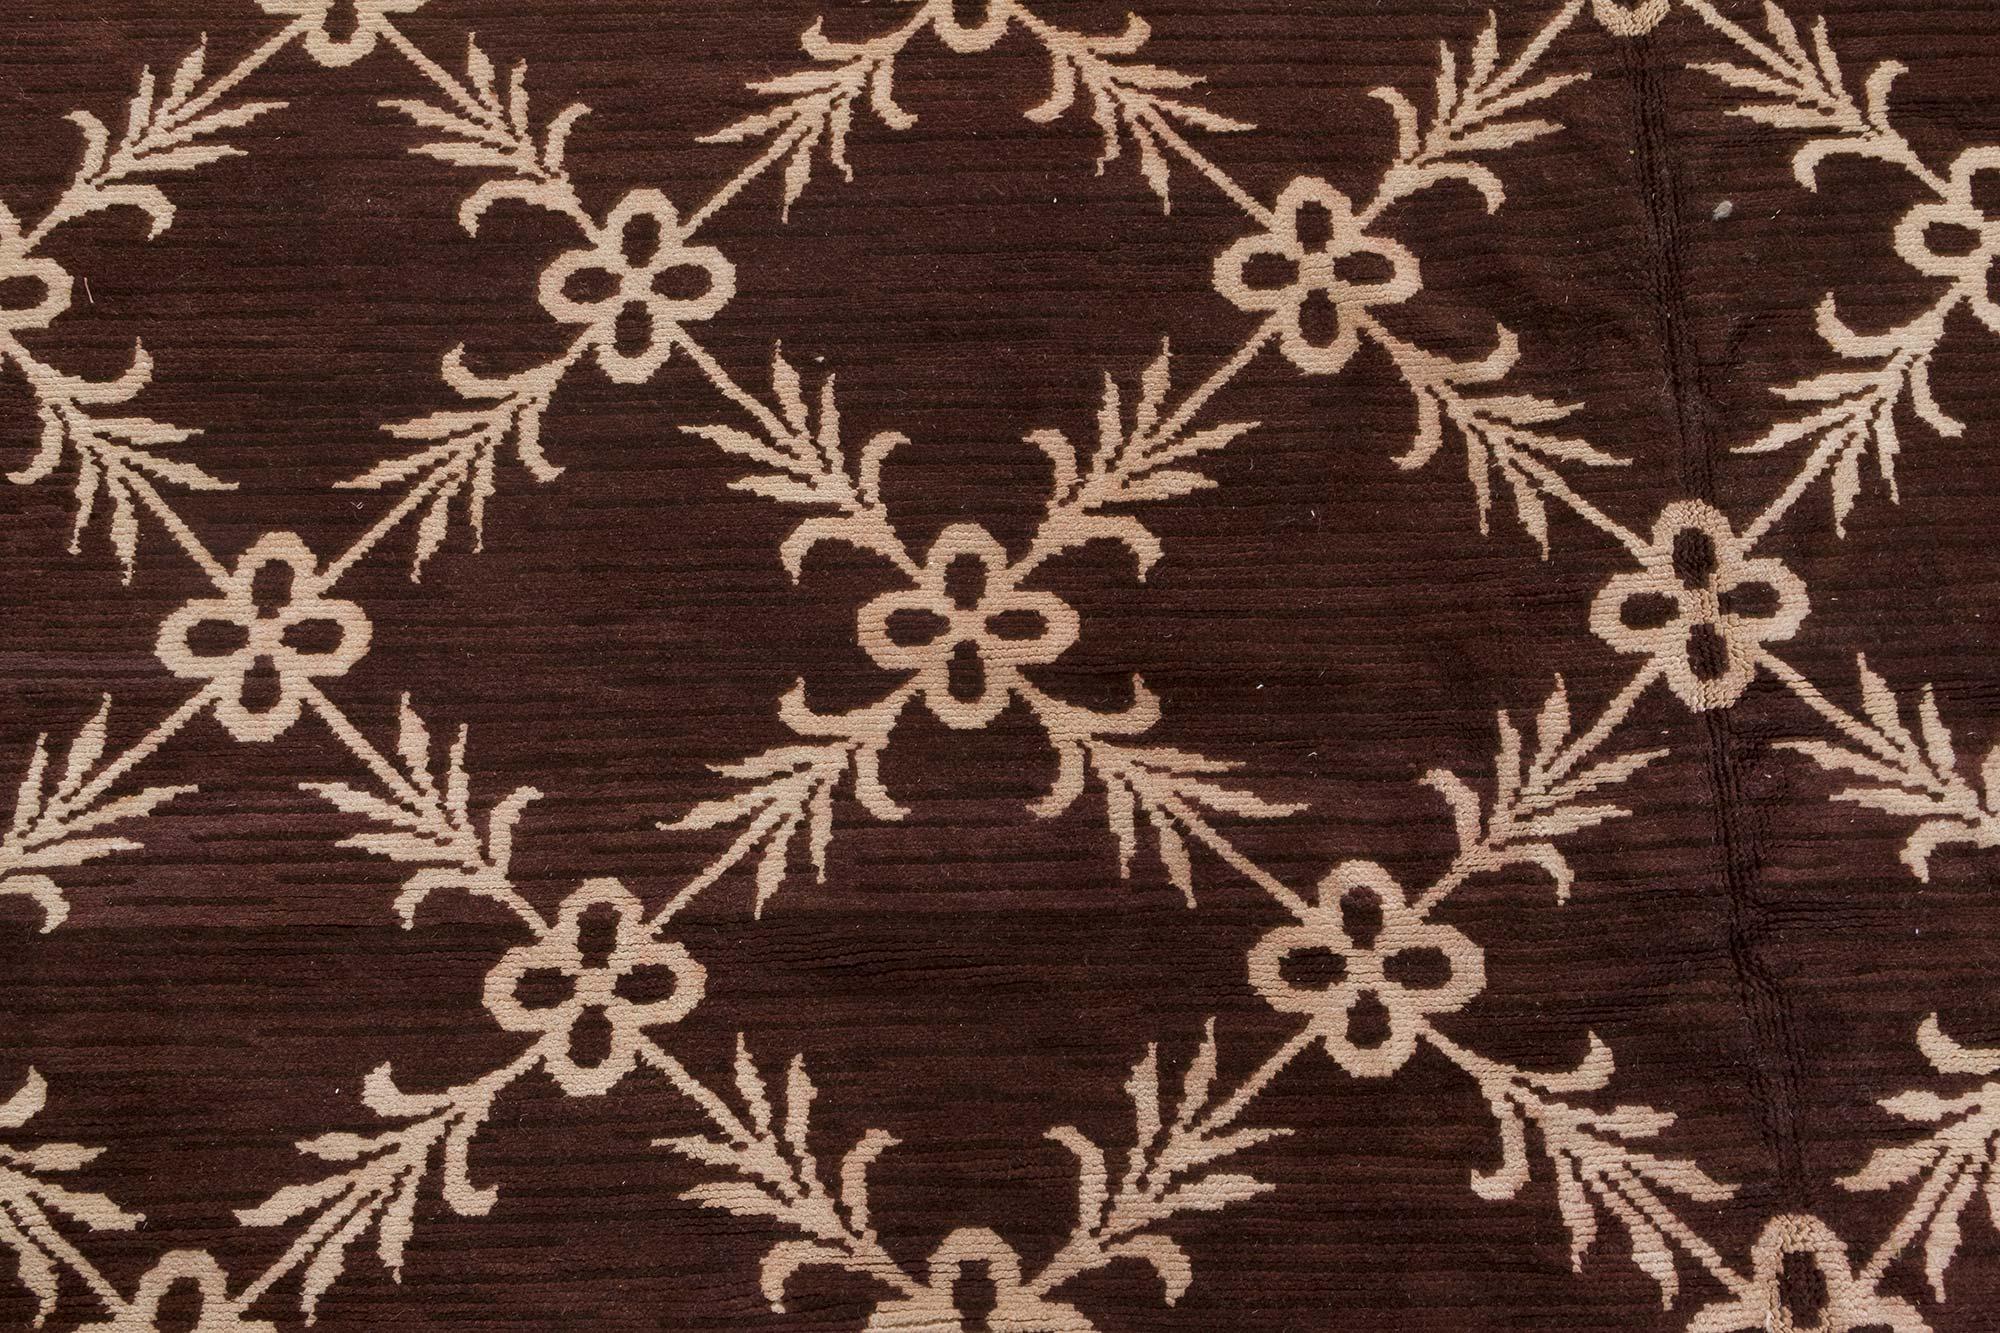 Vintage Spanish Botanic Chocolate brown and ivory handwoven wool carpet
Size: 11'7